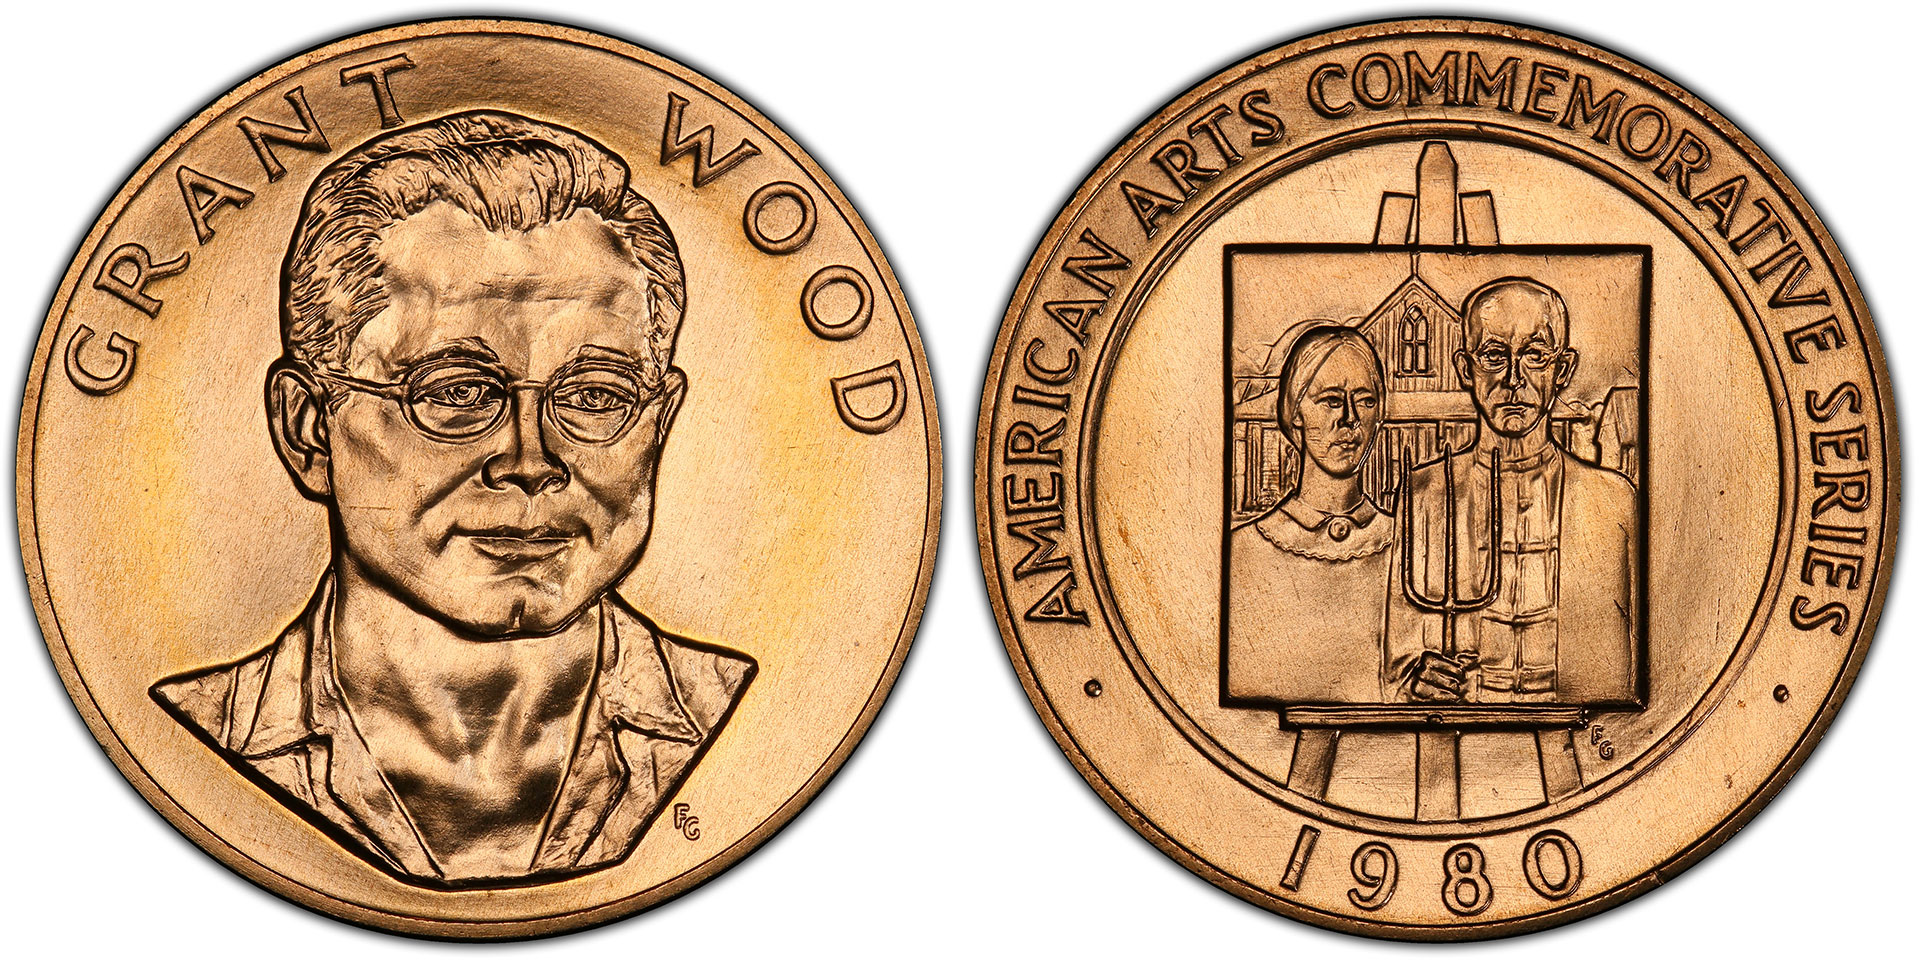 The Grant Wood American Arts Medallion